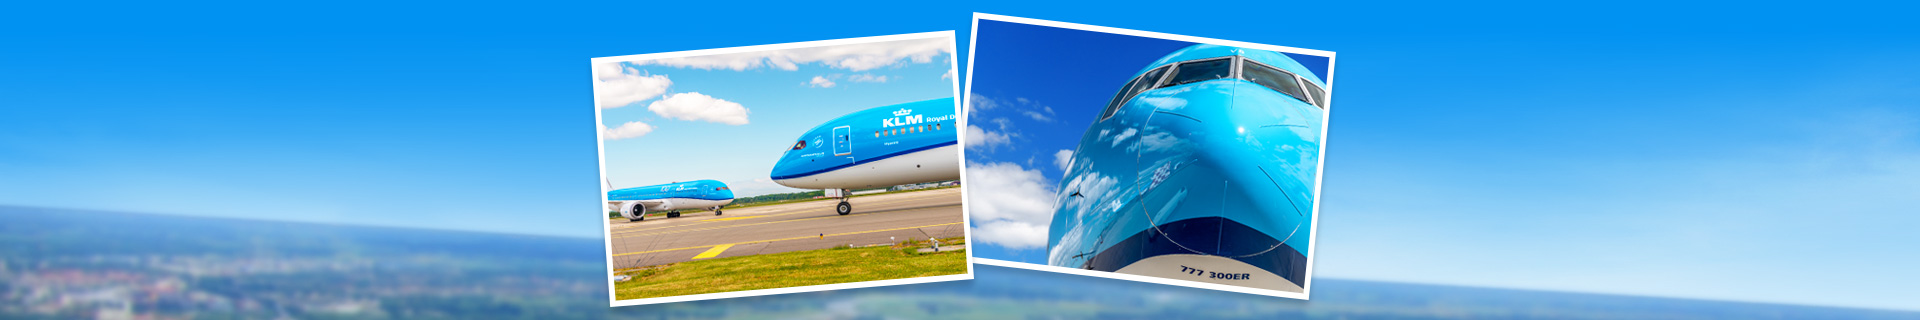 Vliegtuig van KLM